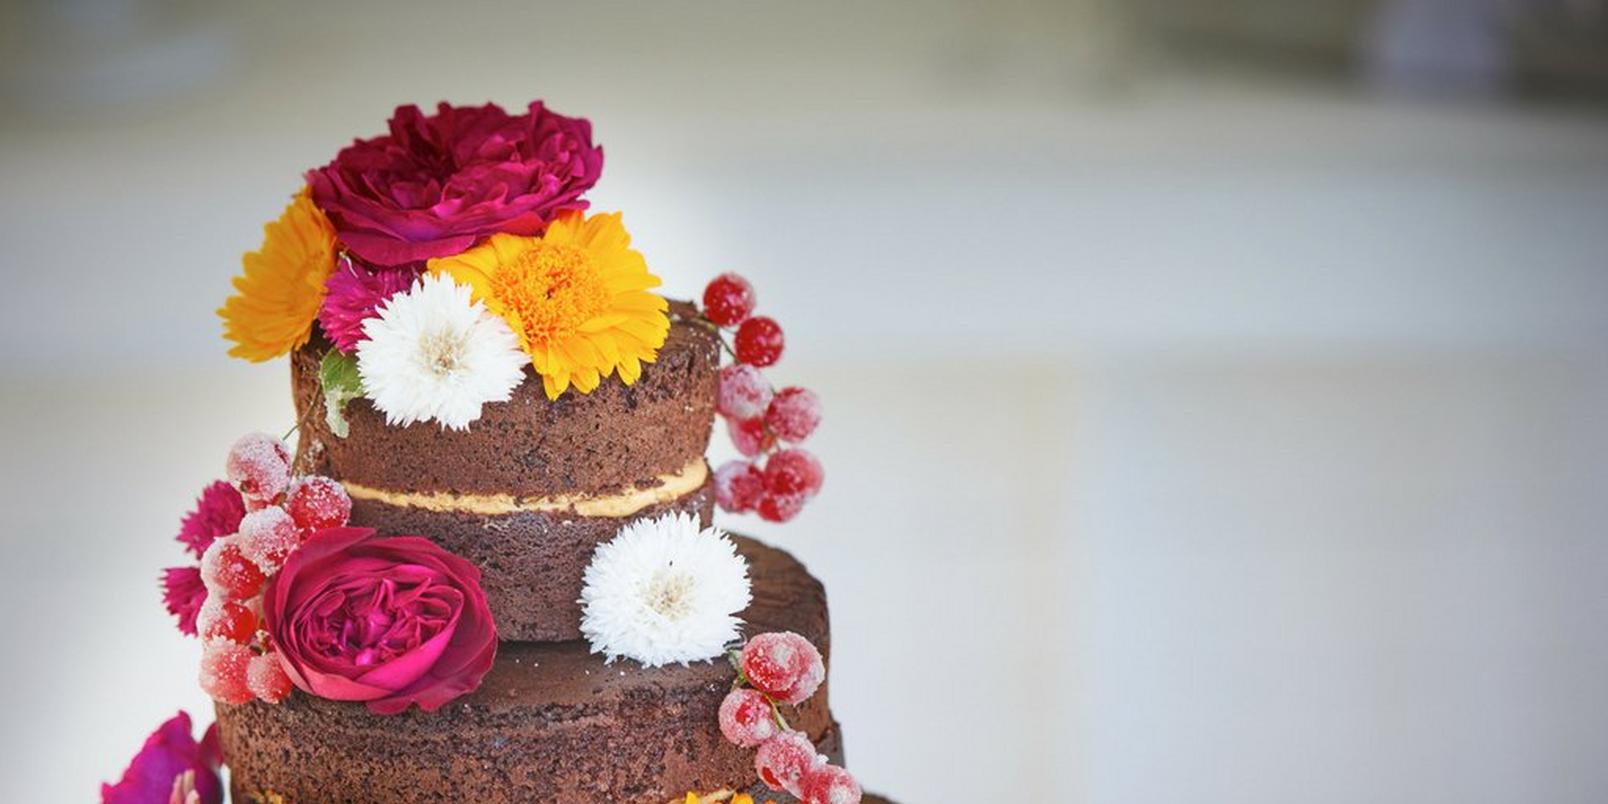 naked-chocolate-wedding-cake-edible-flowers-fruit